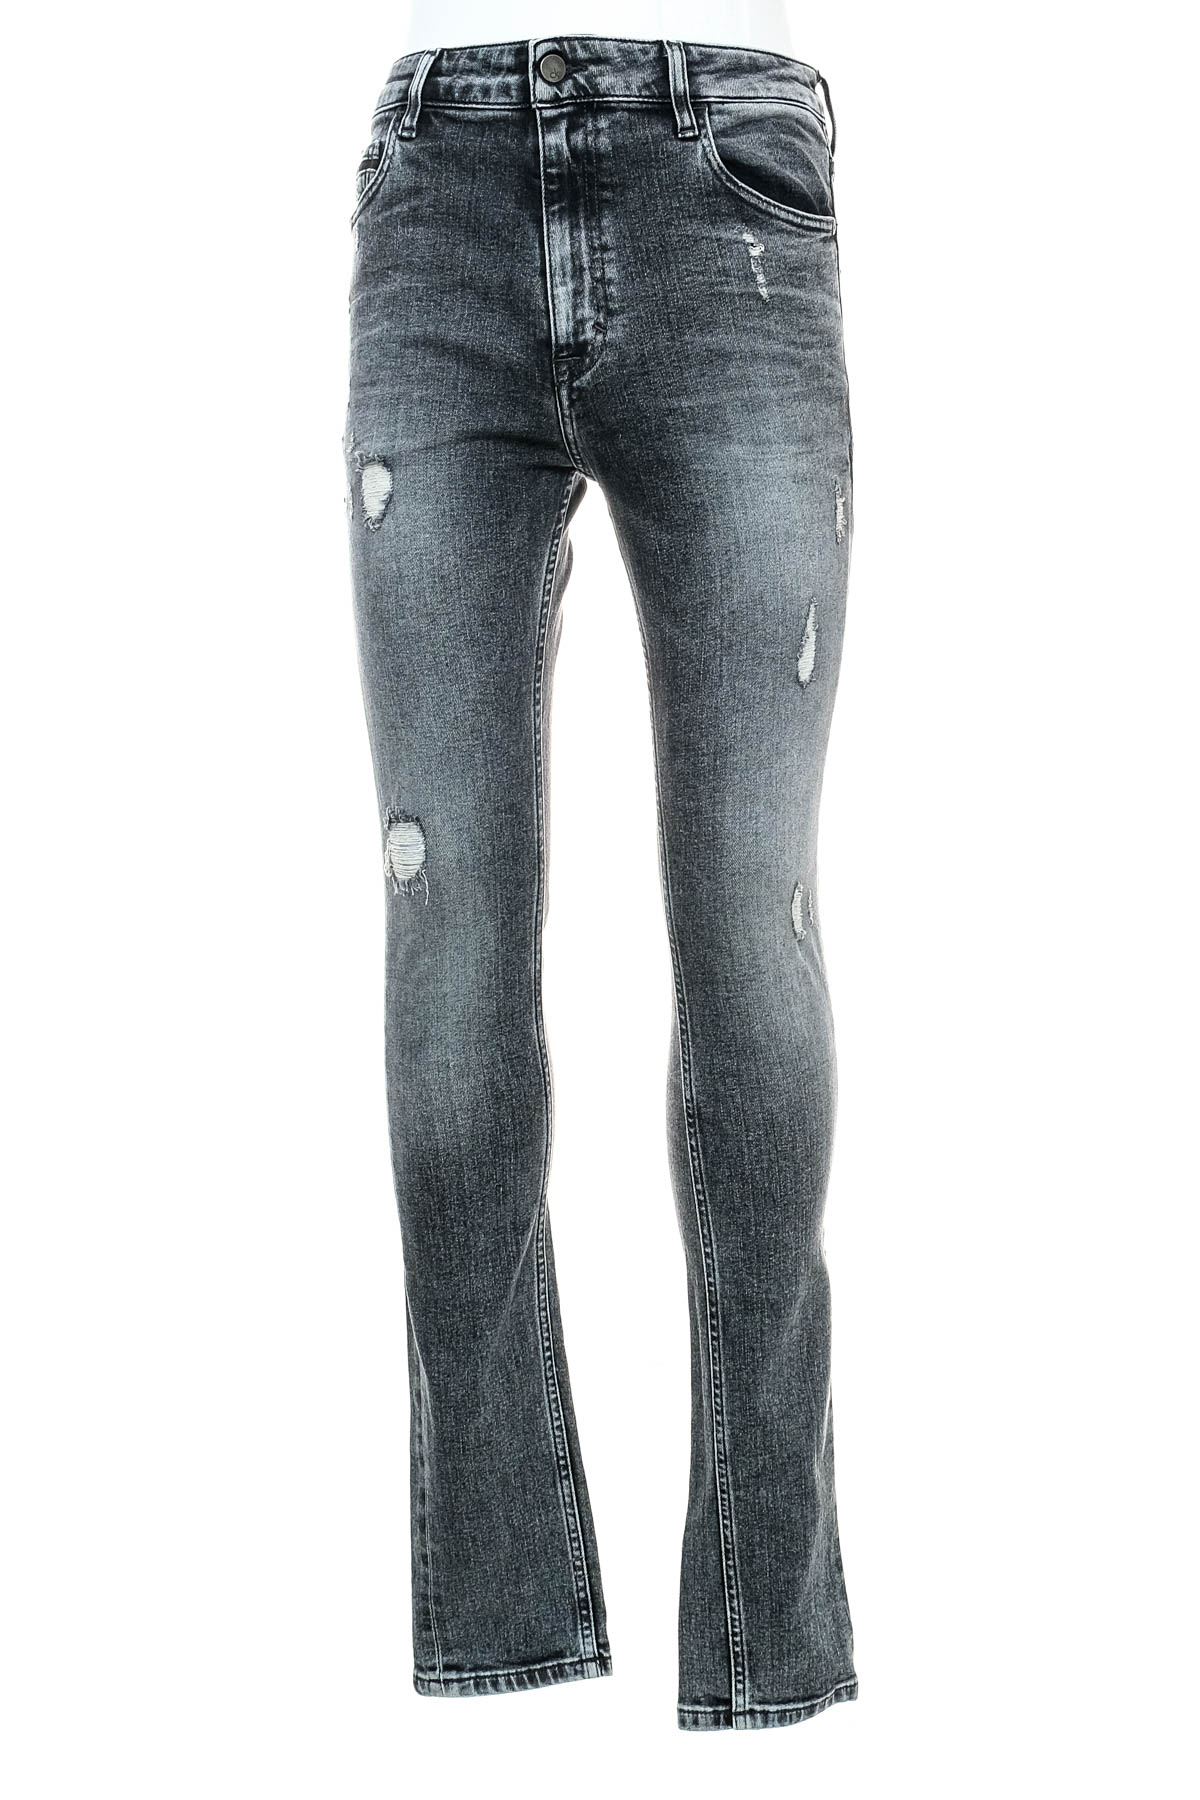 Men's jeans - Calvin Klein Jeans - 0